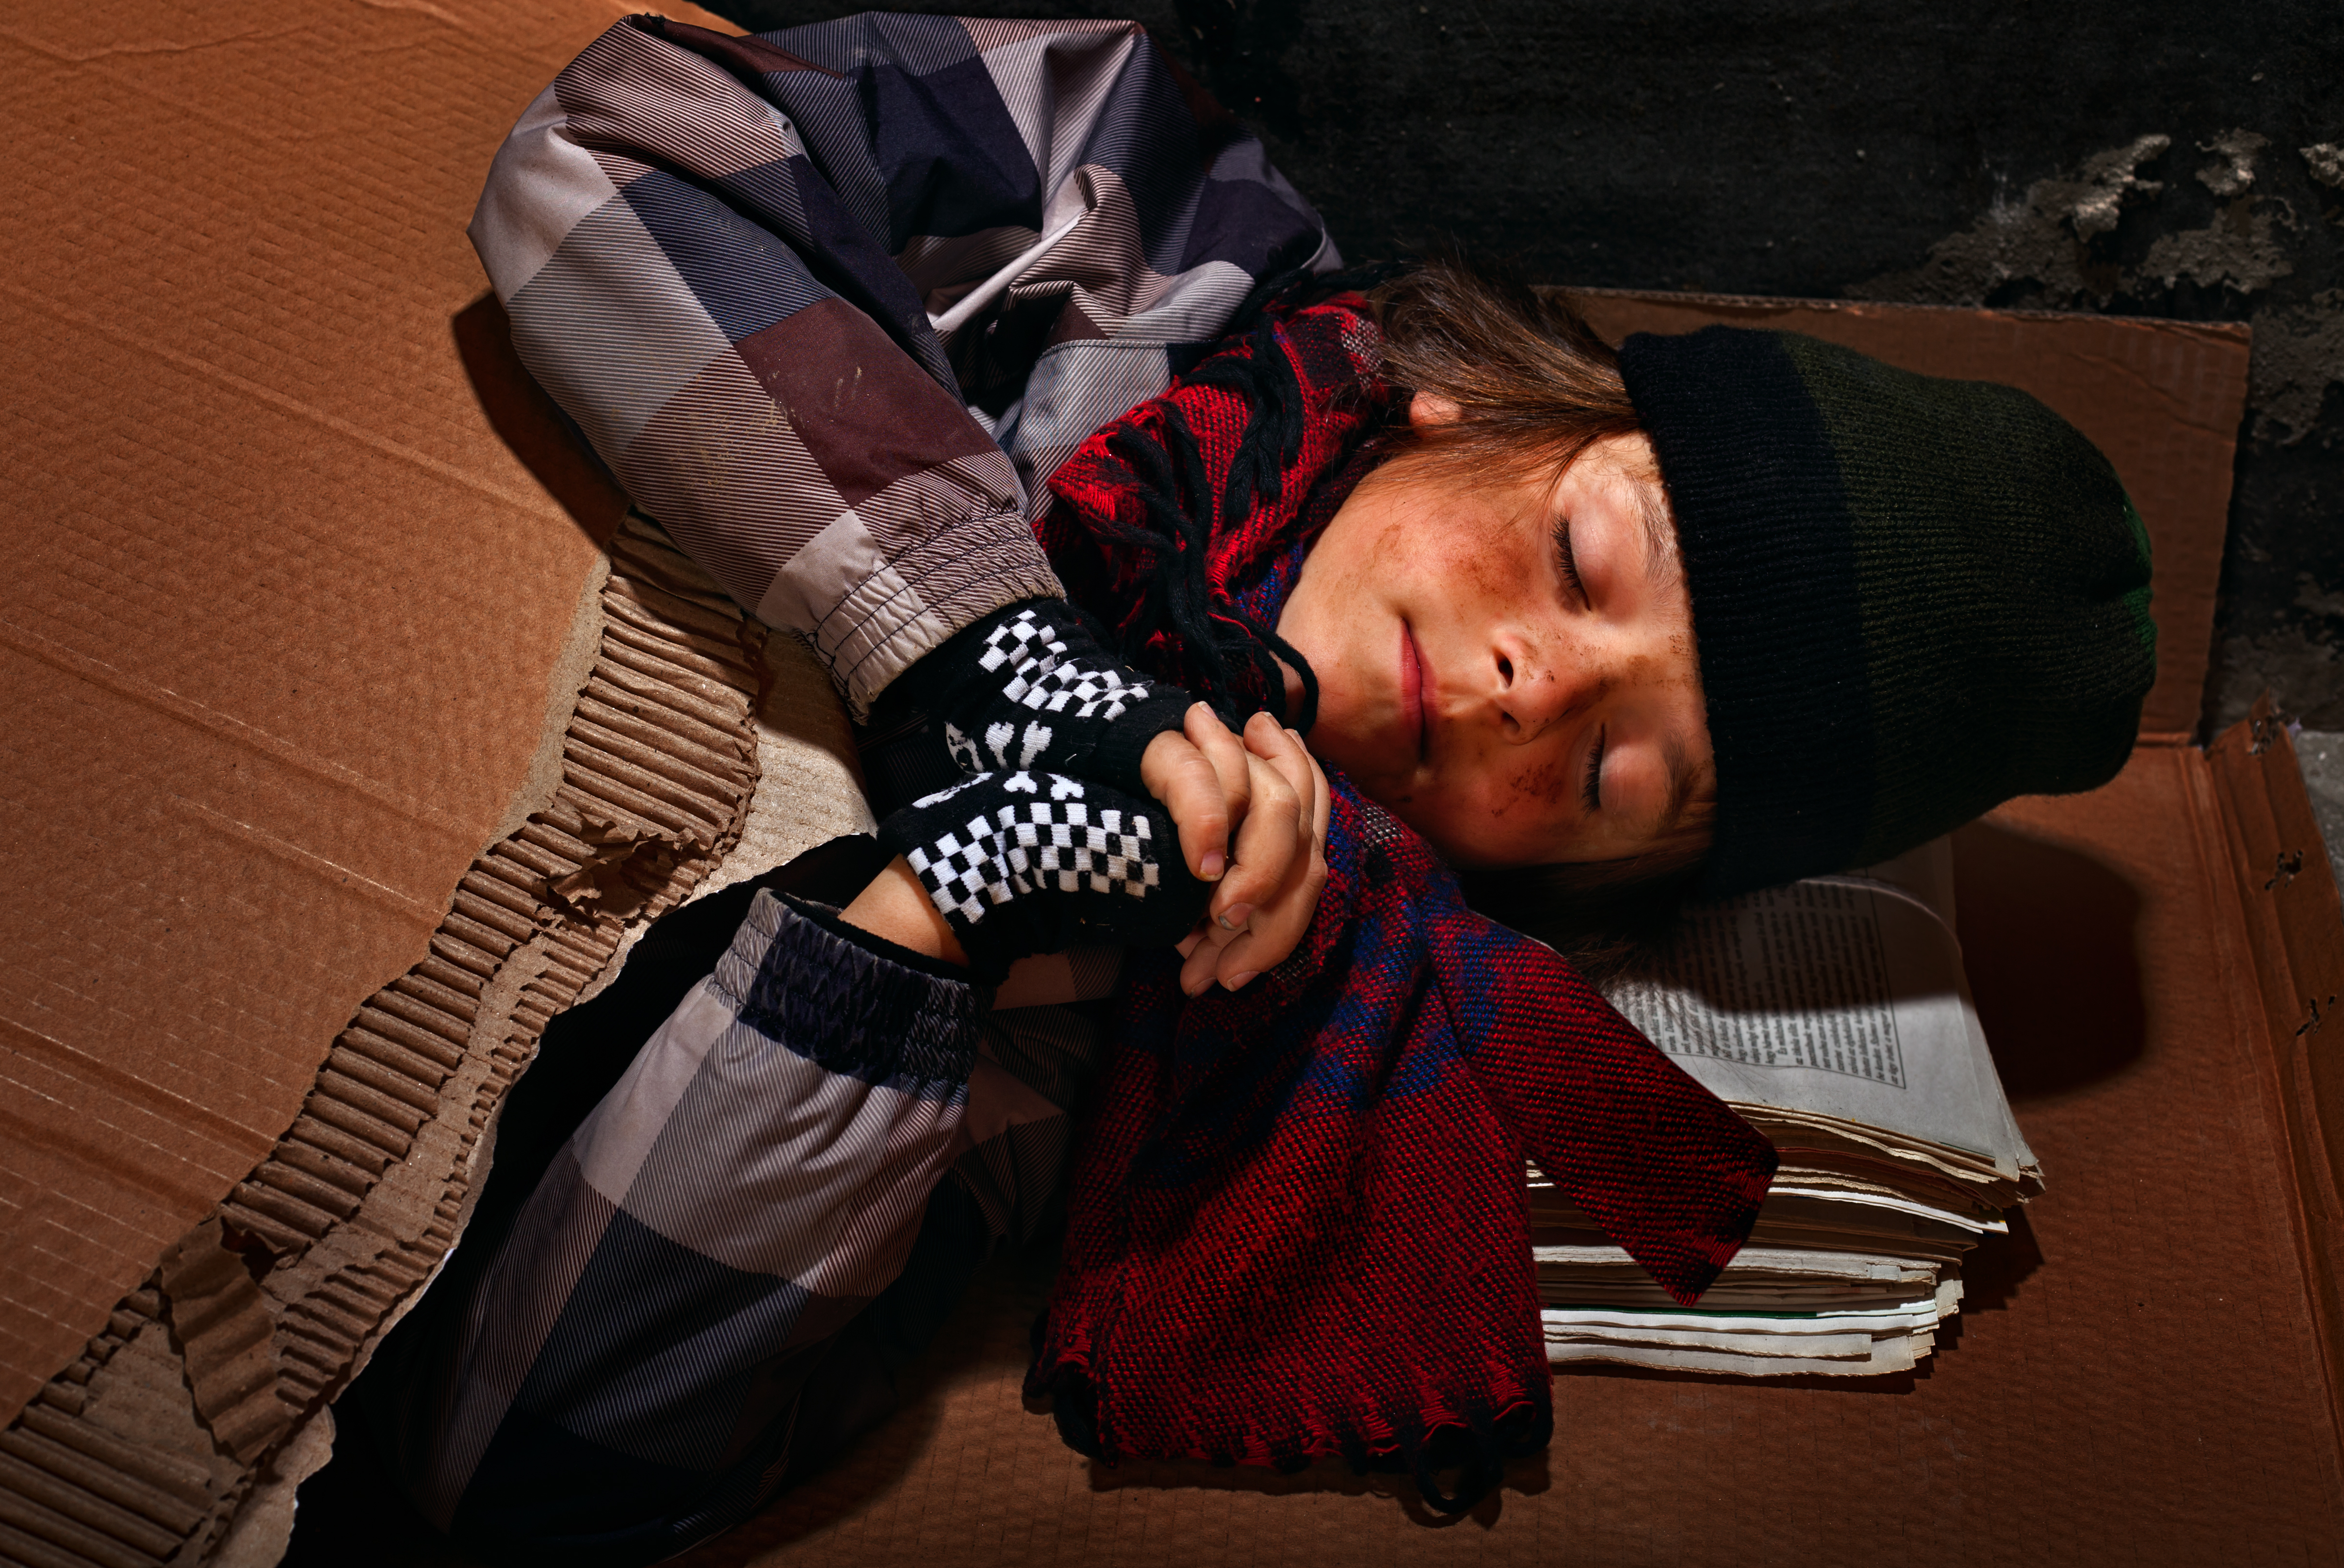 Poor beggar boy preparing to sleep on the street | Source: Shutterstock.com